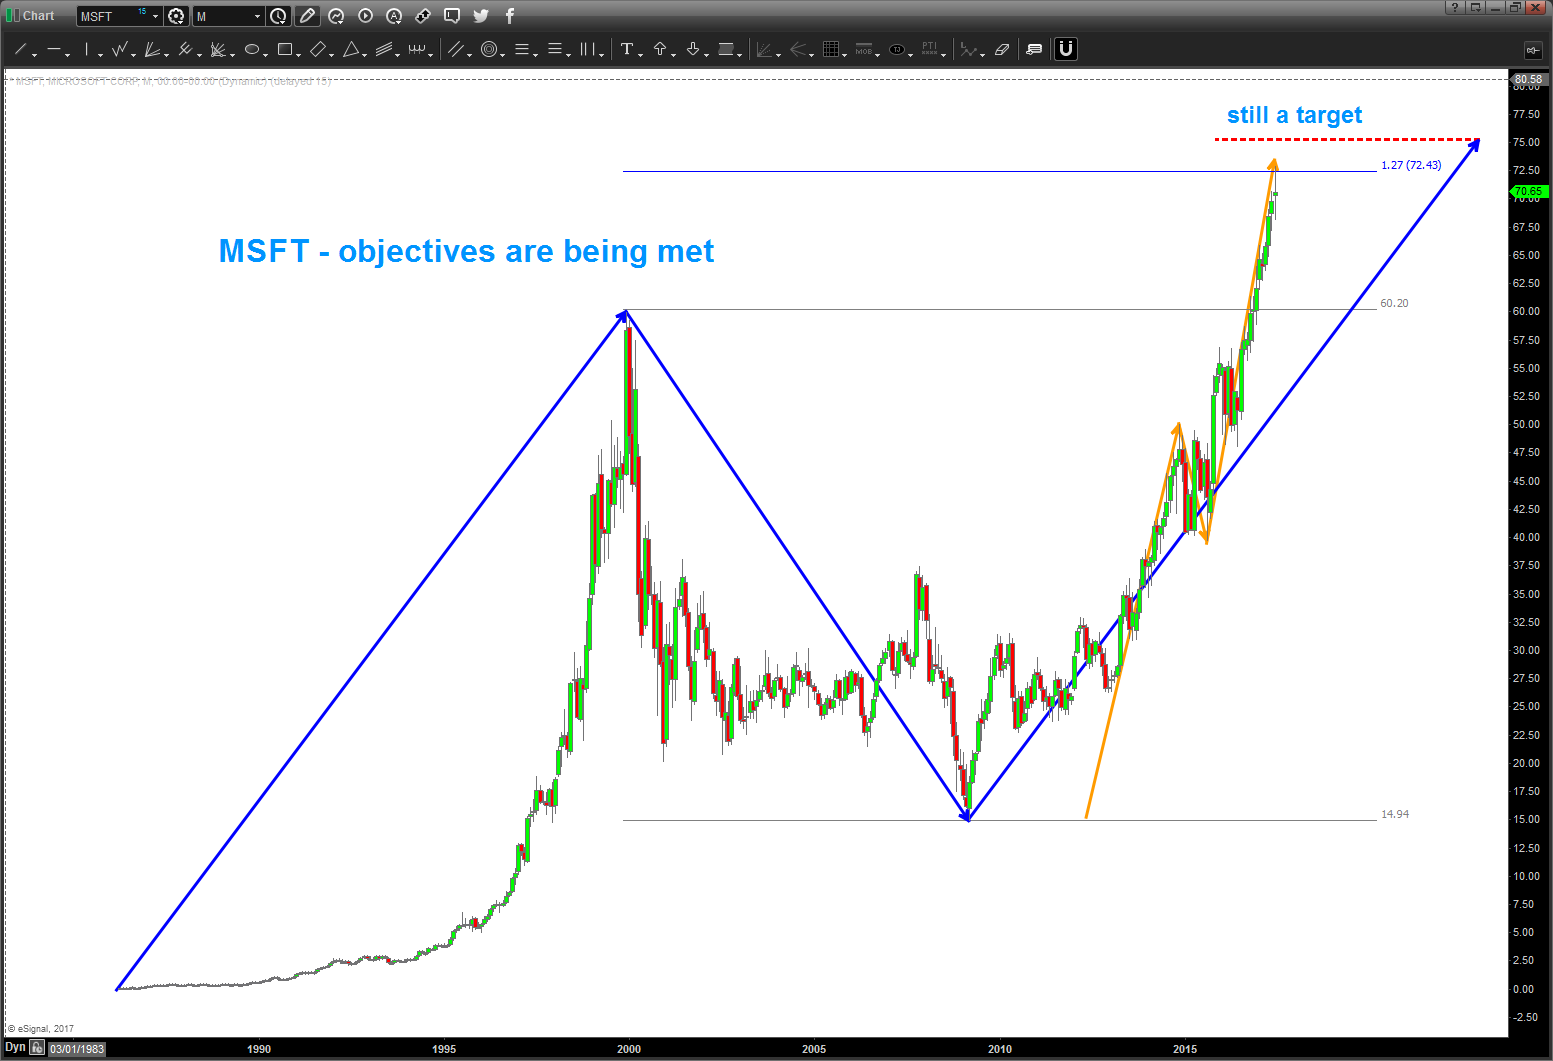 Microsoft Stock (MSFT) Near Major Trading Price Objective - See It Market